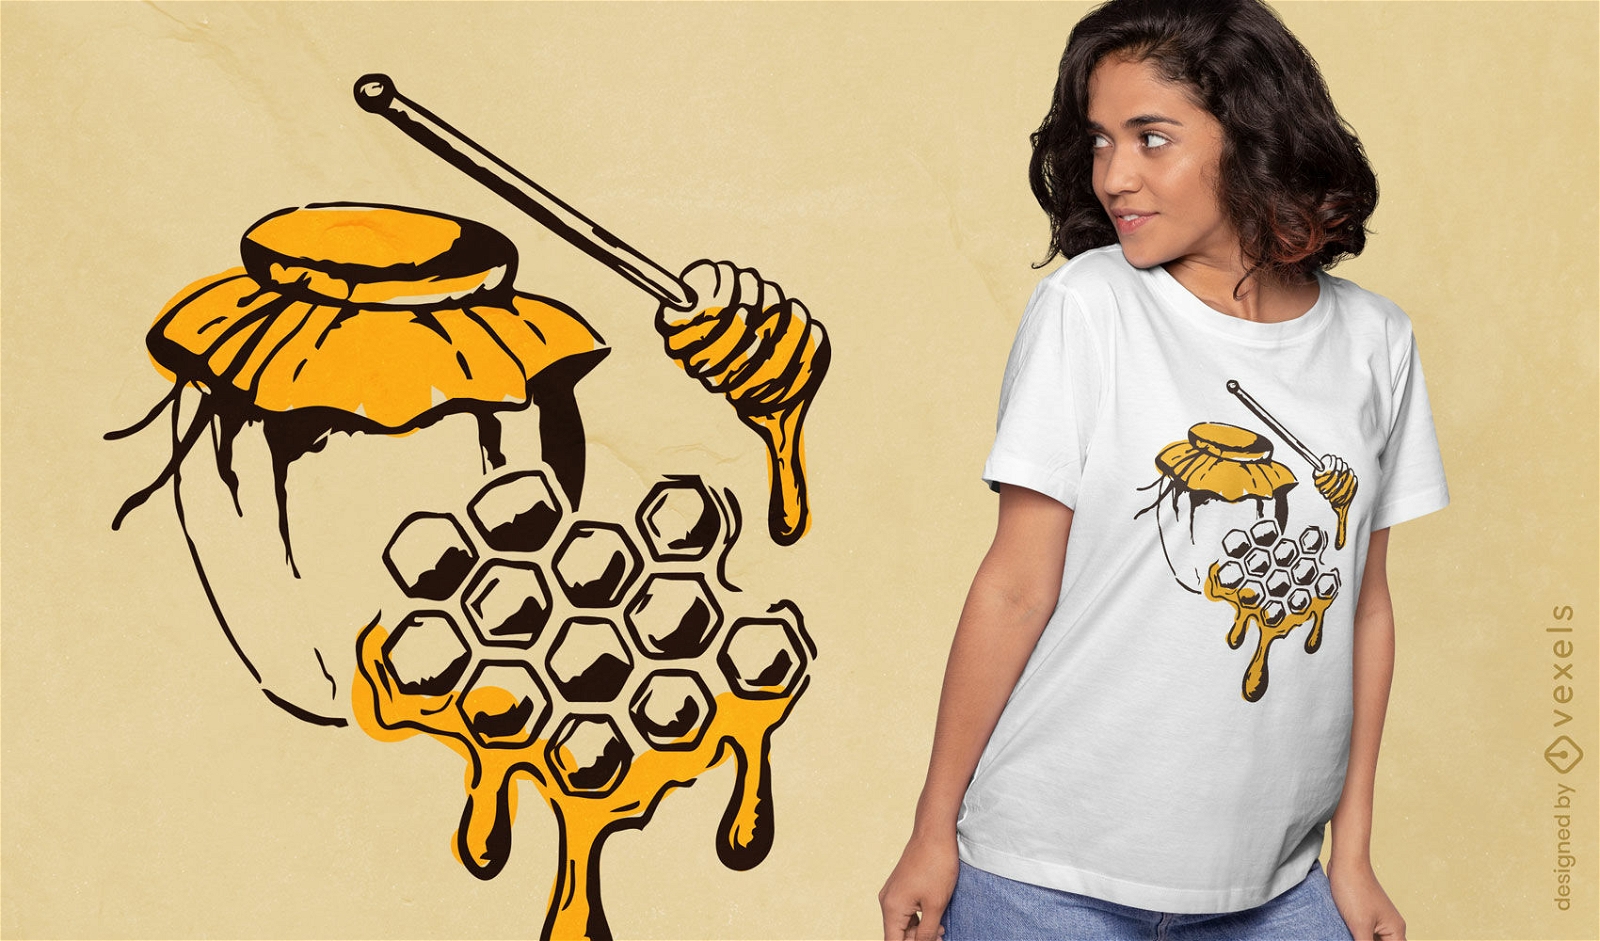 Honeycomb and honey jar t-shirt design